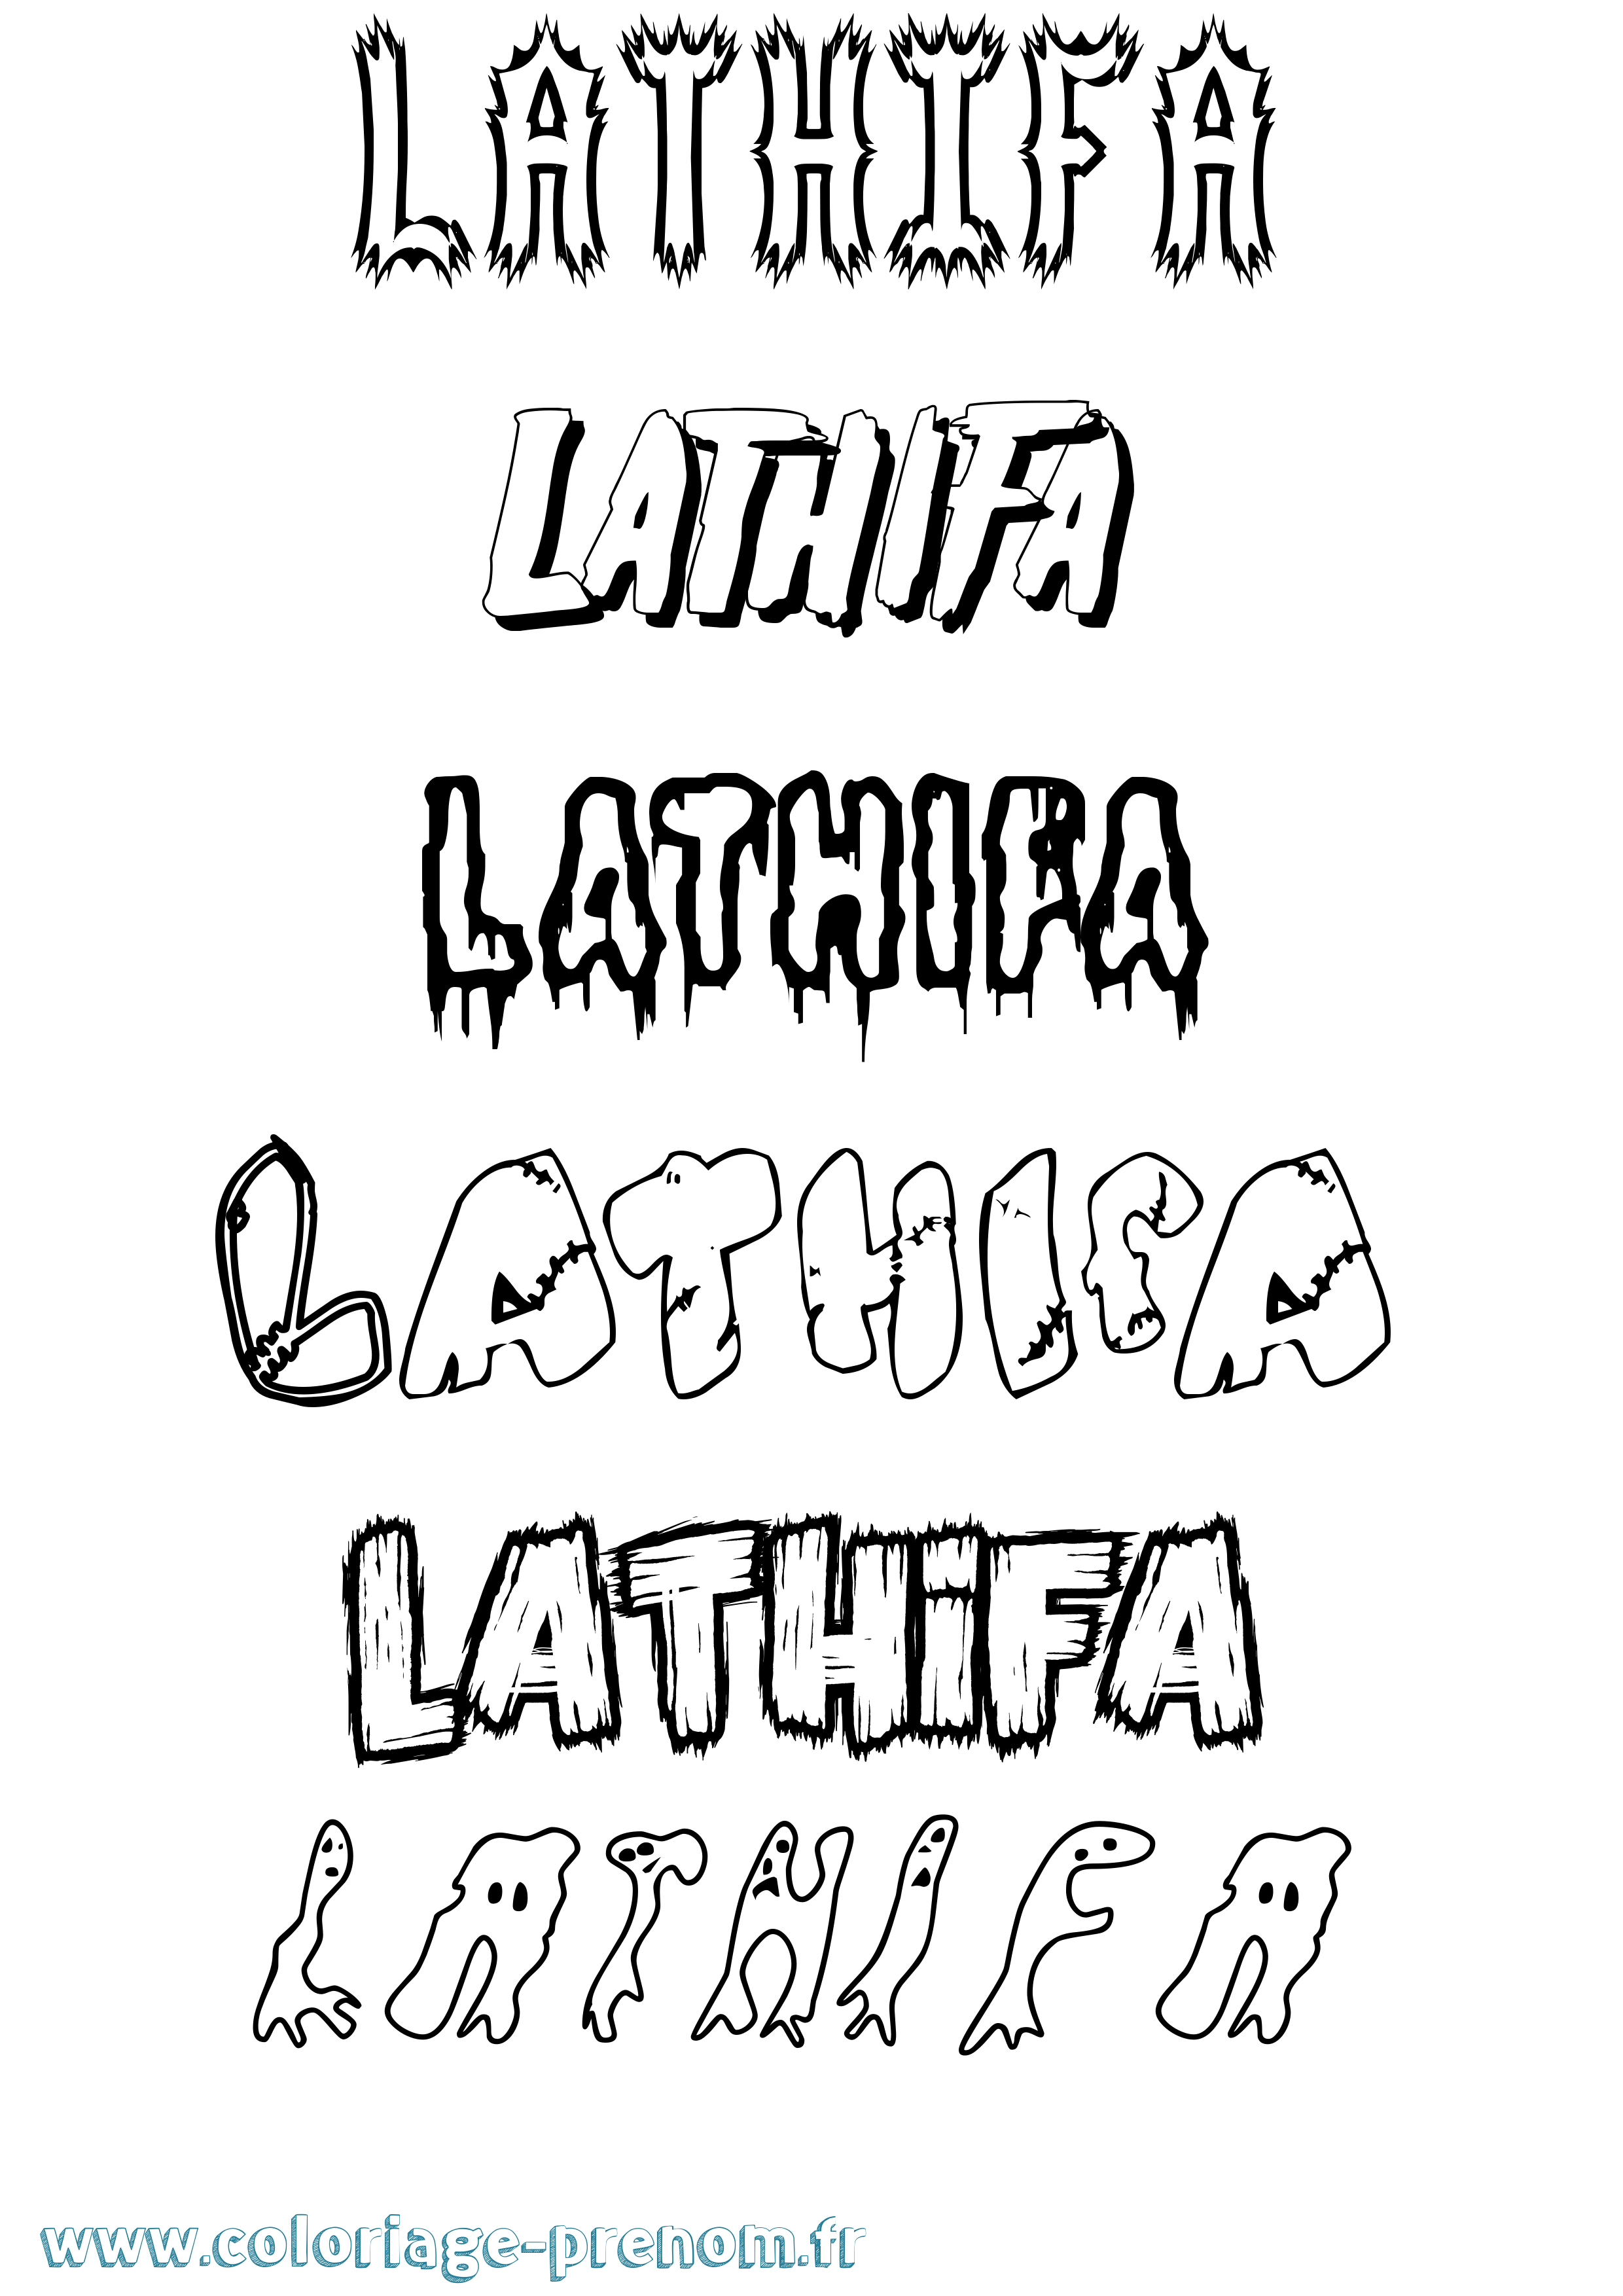 Coloriage prénom Lathifa Frisson